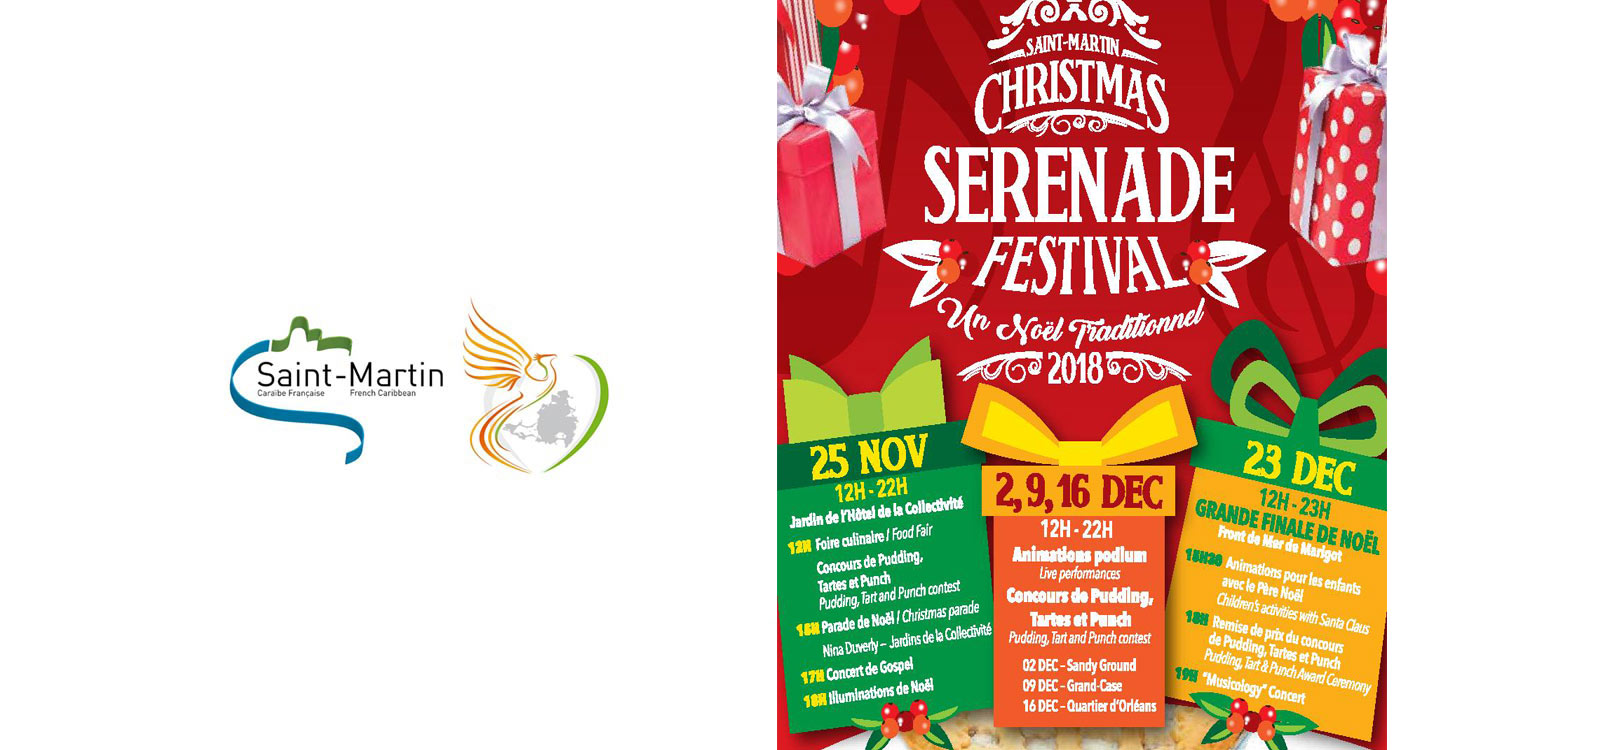 Saint-Martin Christmas Serenade Festival 2018